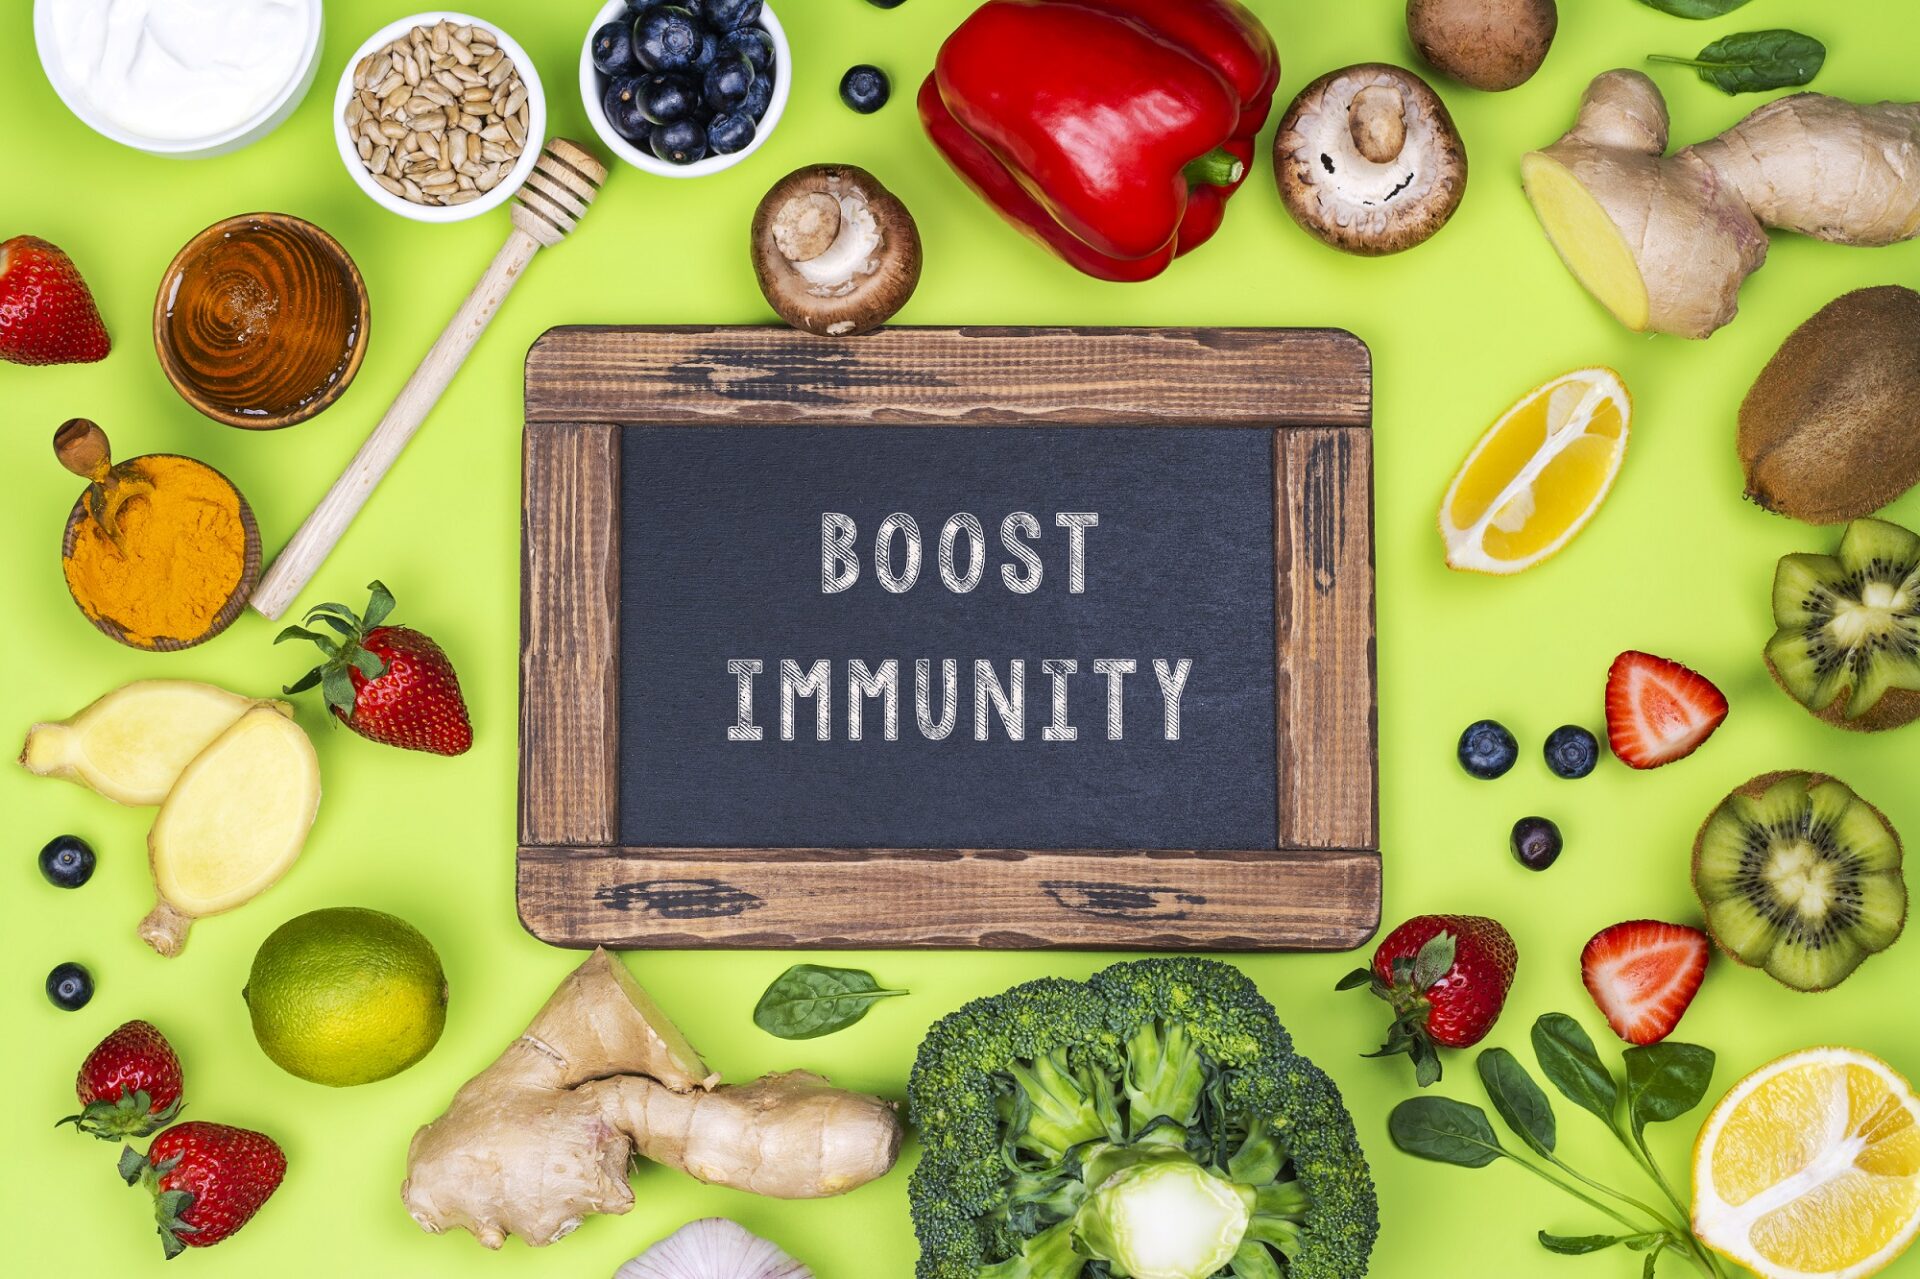 Immune system boost